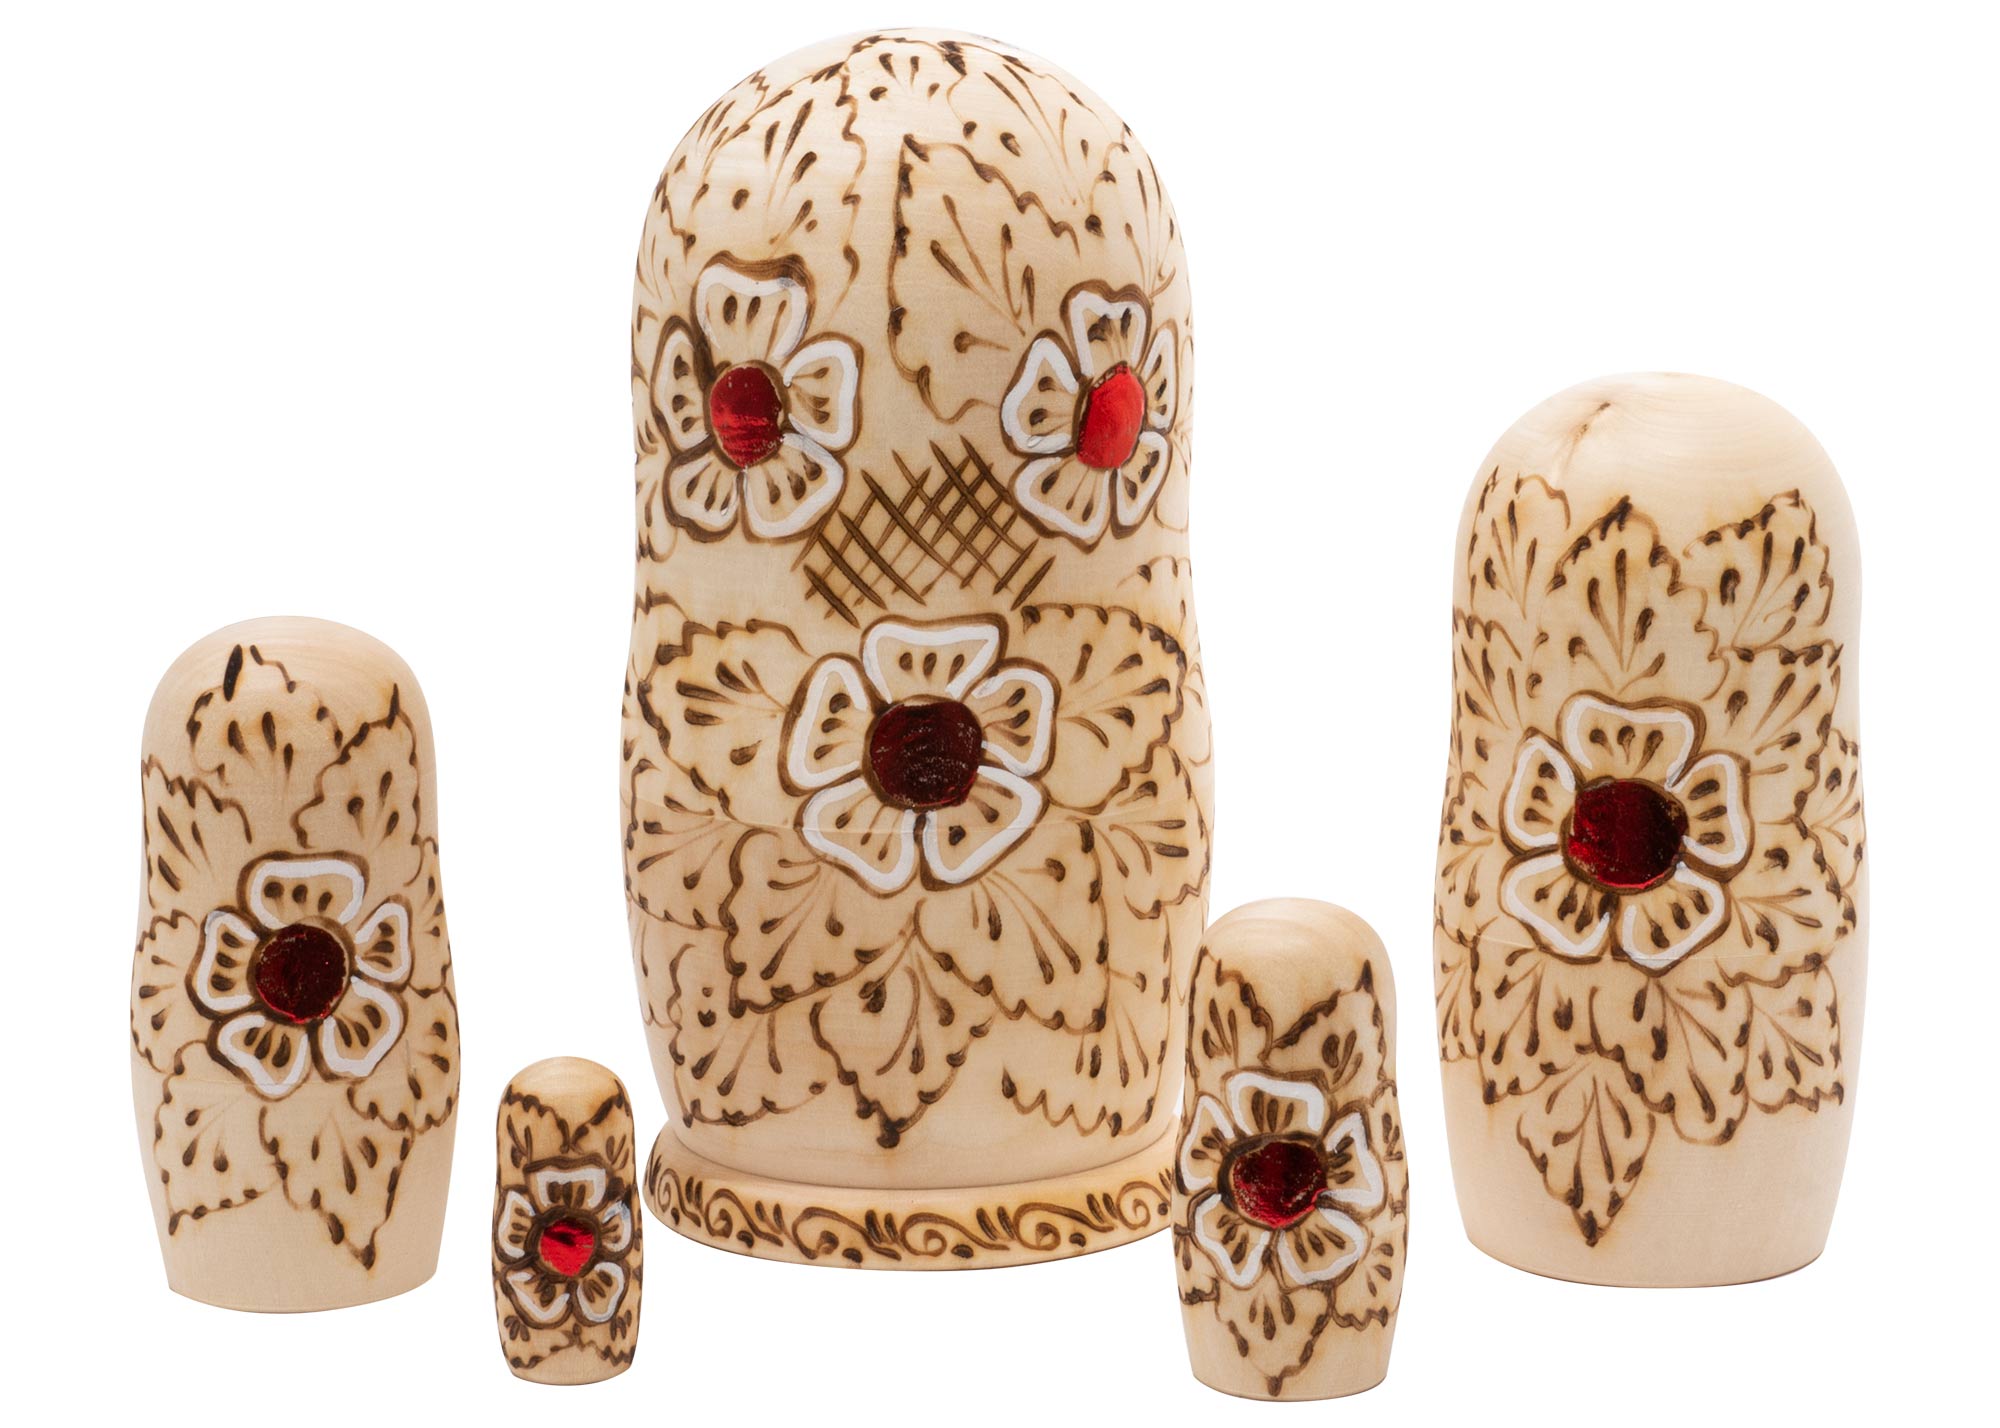 Buy Russian Domes Woodburned Nesting Doll 5pc./6" at GoldenCockerel.com